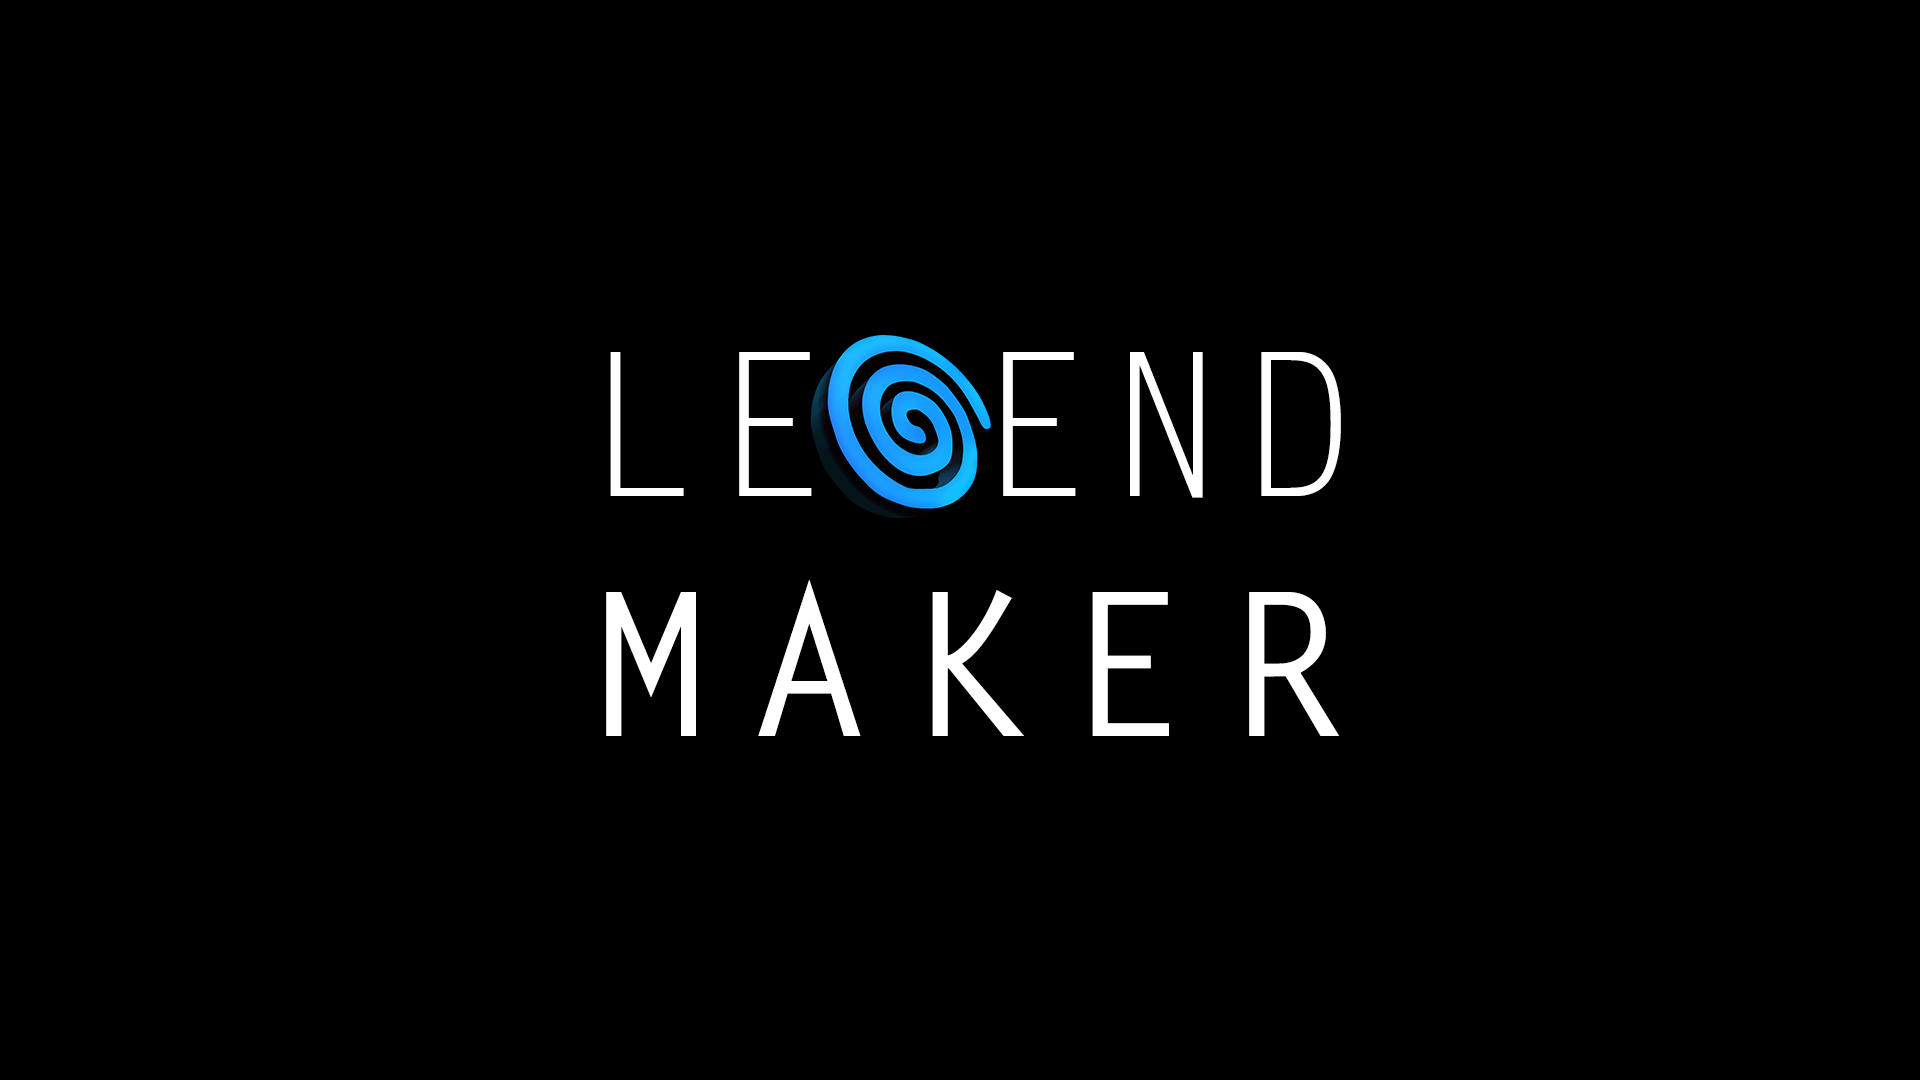 DVS Gaming Logo - Legend Maker Logo - DVS Gaming